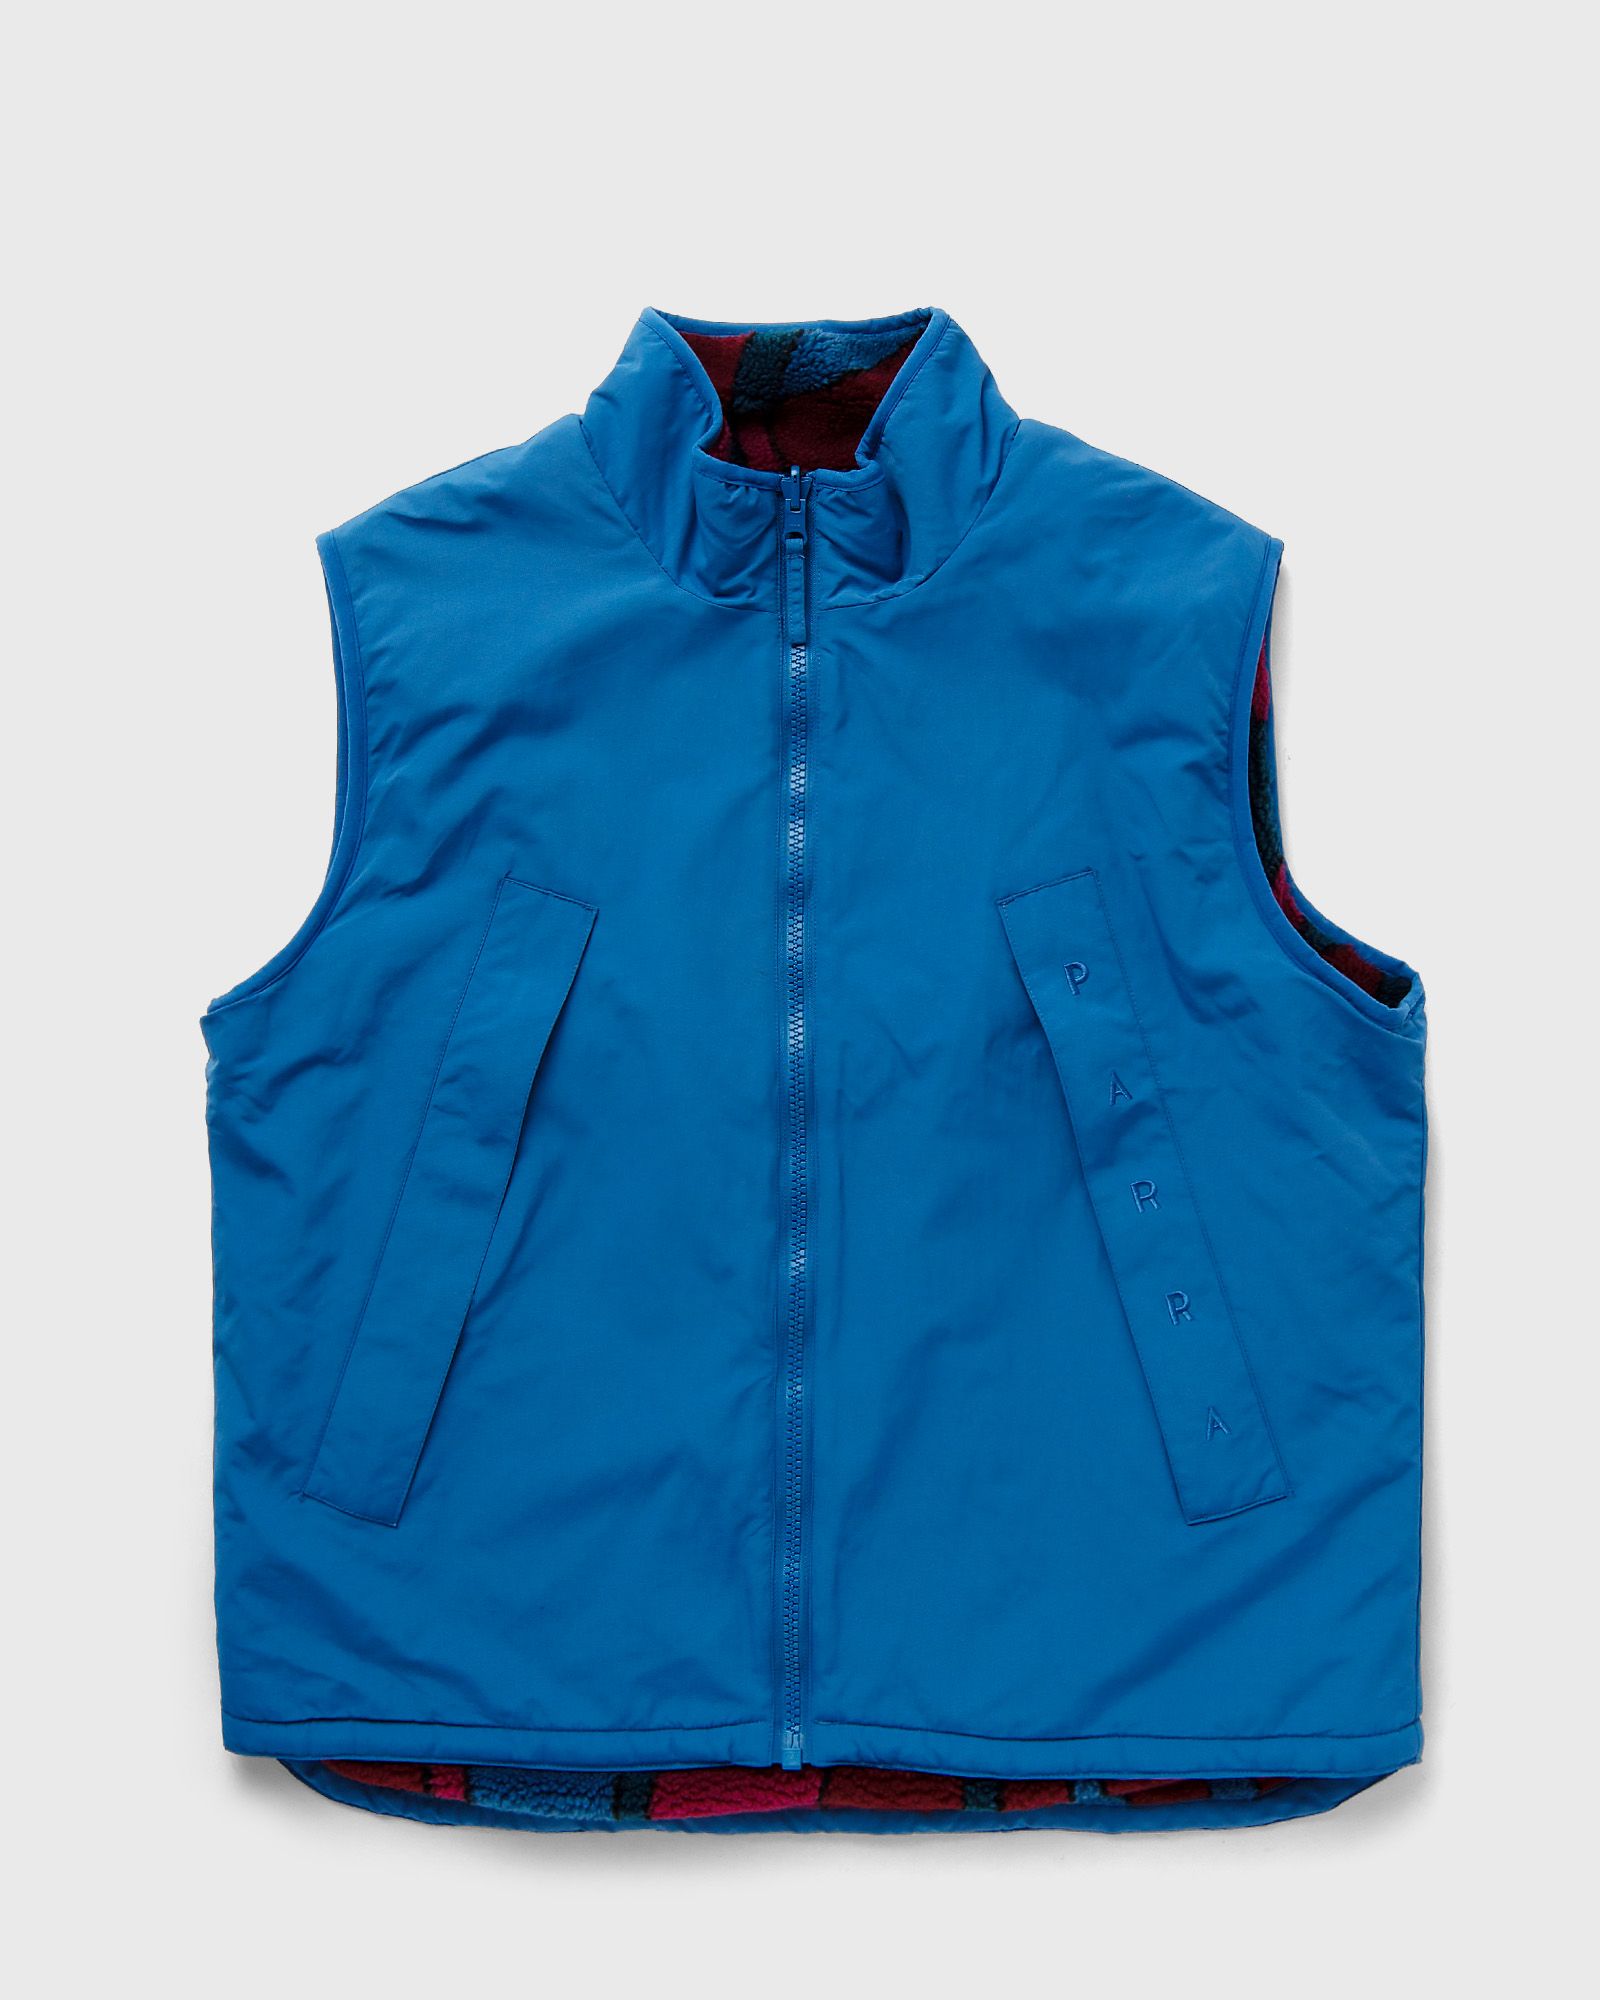 By Parra - trees in wind reversible vest men vests blue in größe:xxl